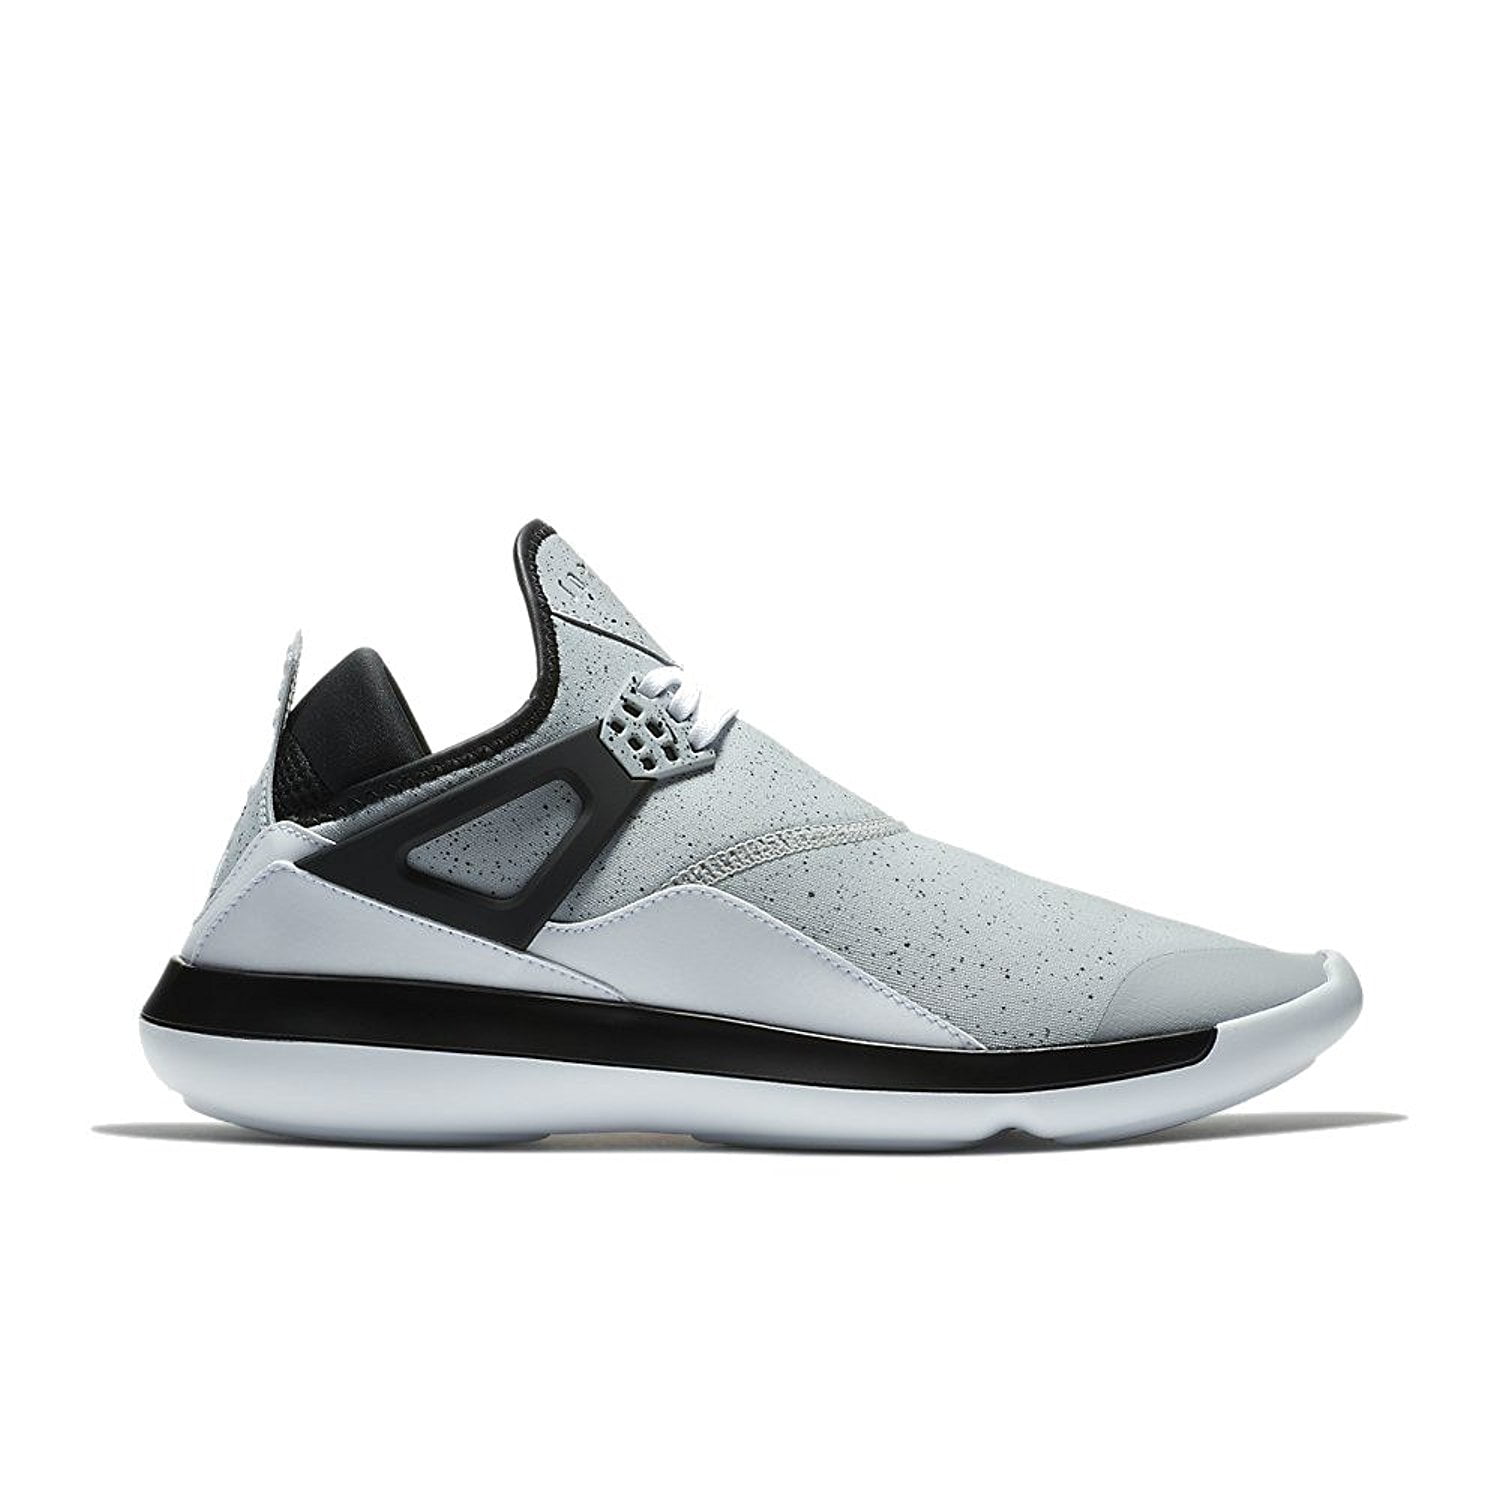 Nike Men's Jordan Fly 89 White / White-White-Chrome Shoe - 9.5M -